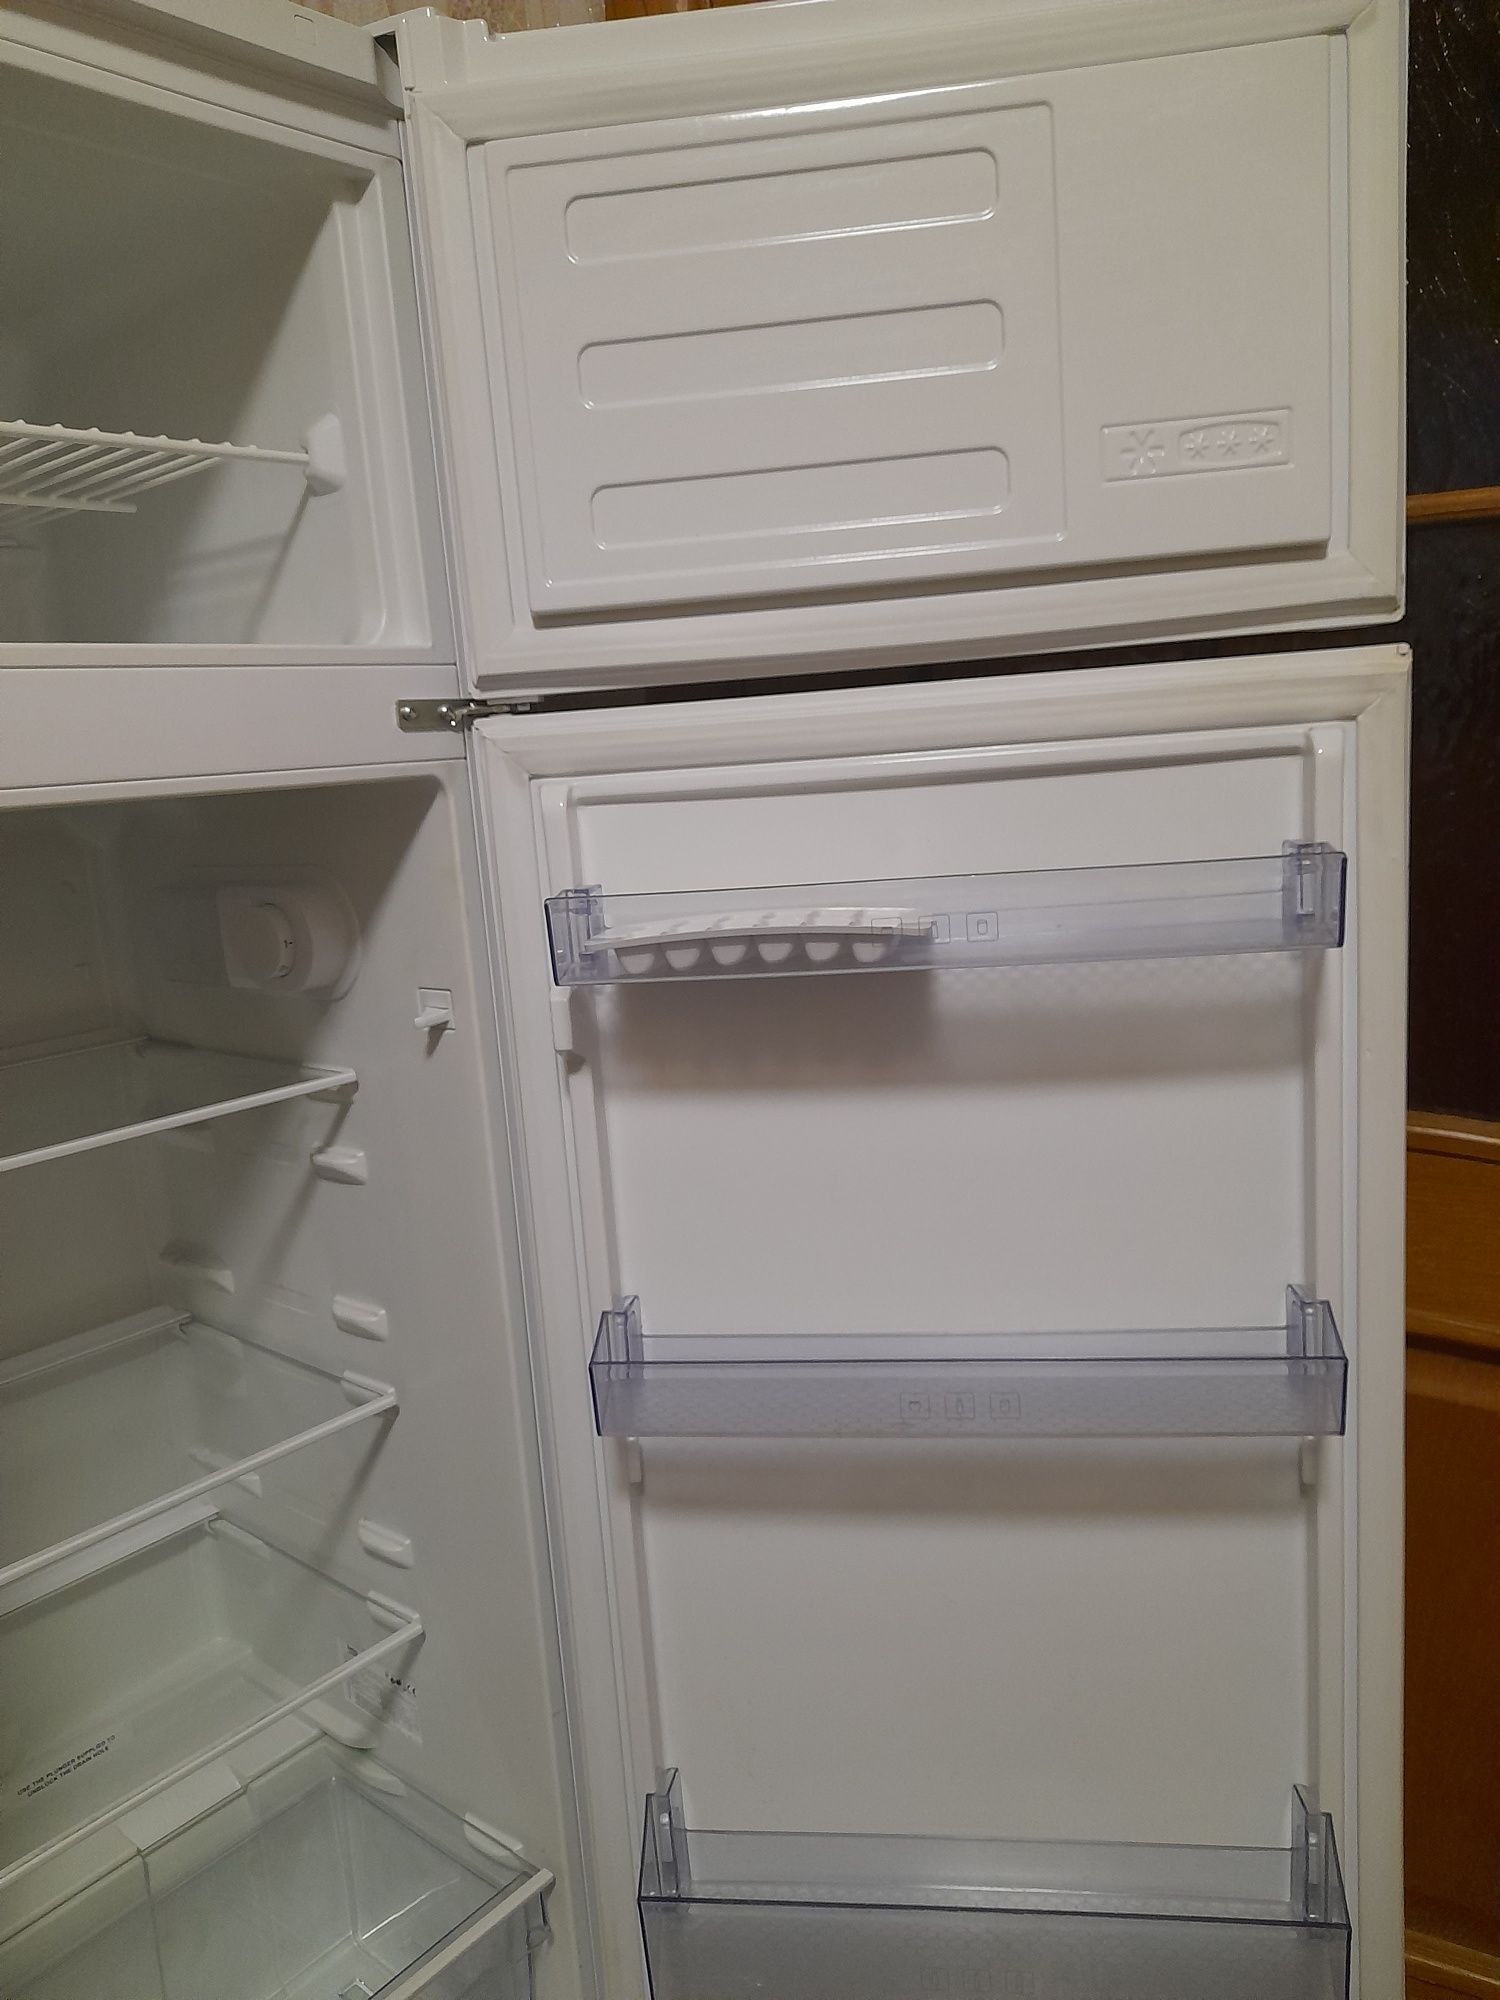 Продам холодильник "ВЕКО" в нов дзюдоому стані